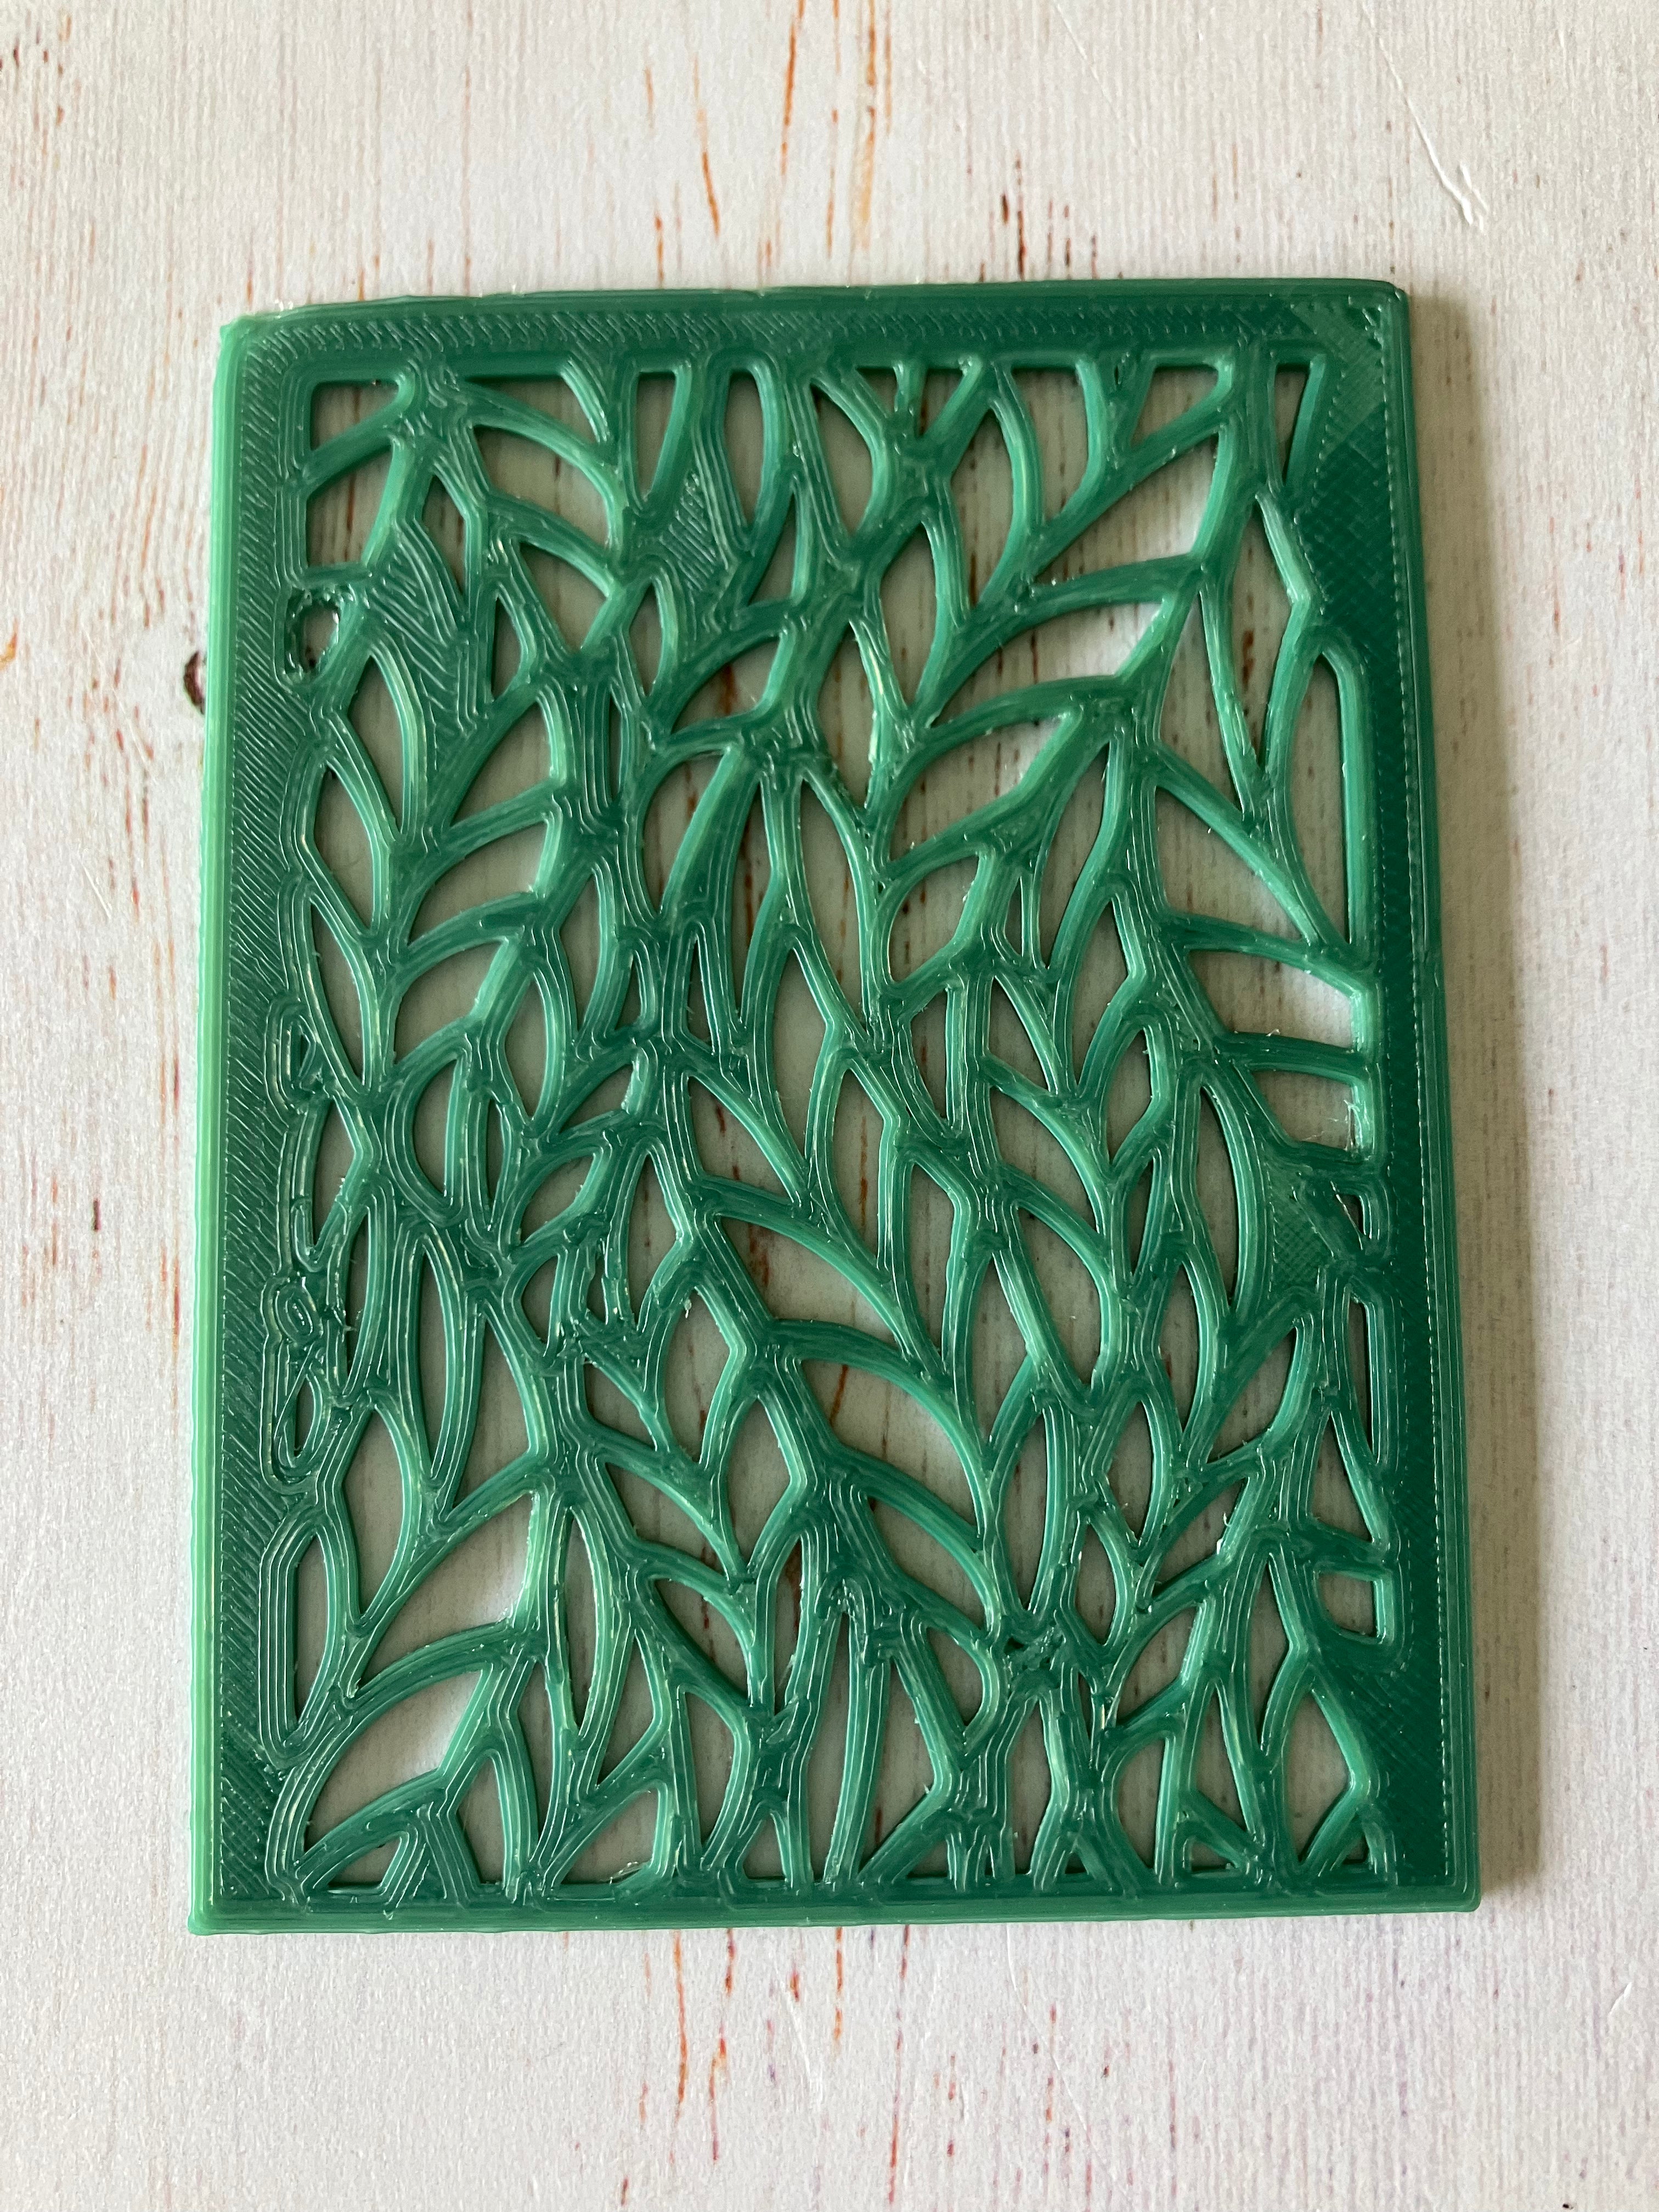 3D Gizmo's - Texture stencil - Leaves